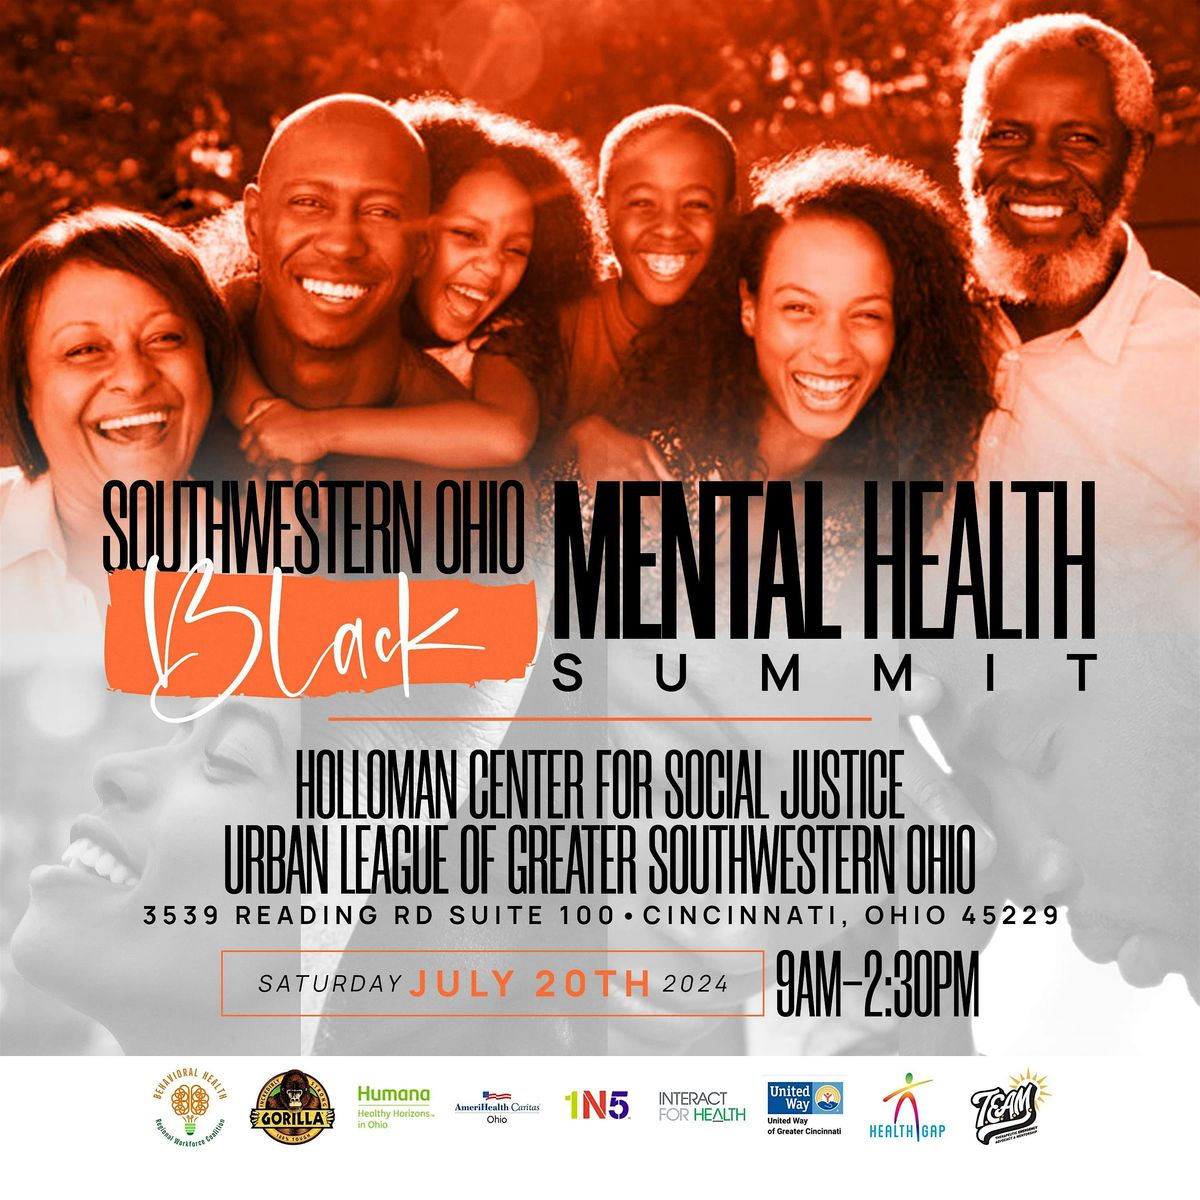 Southwestern Ohio Black Mental Health Summit for the Community